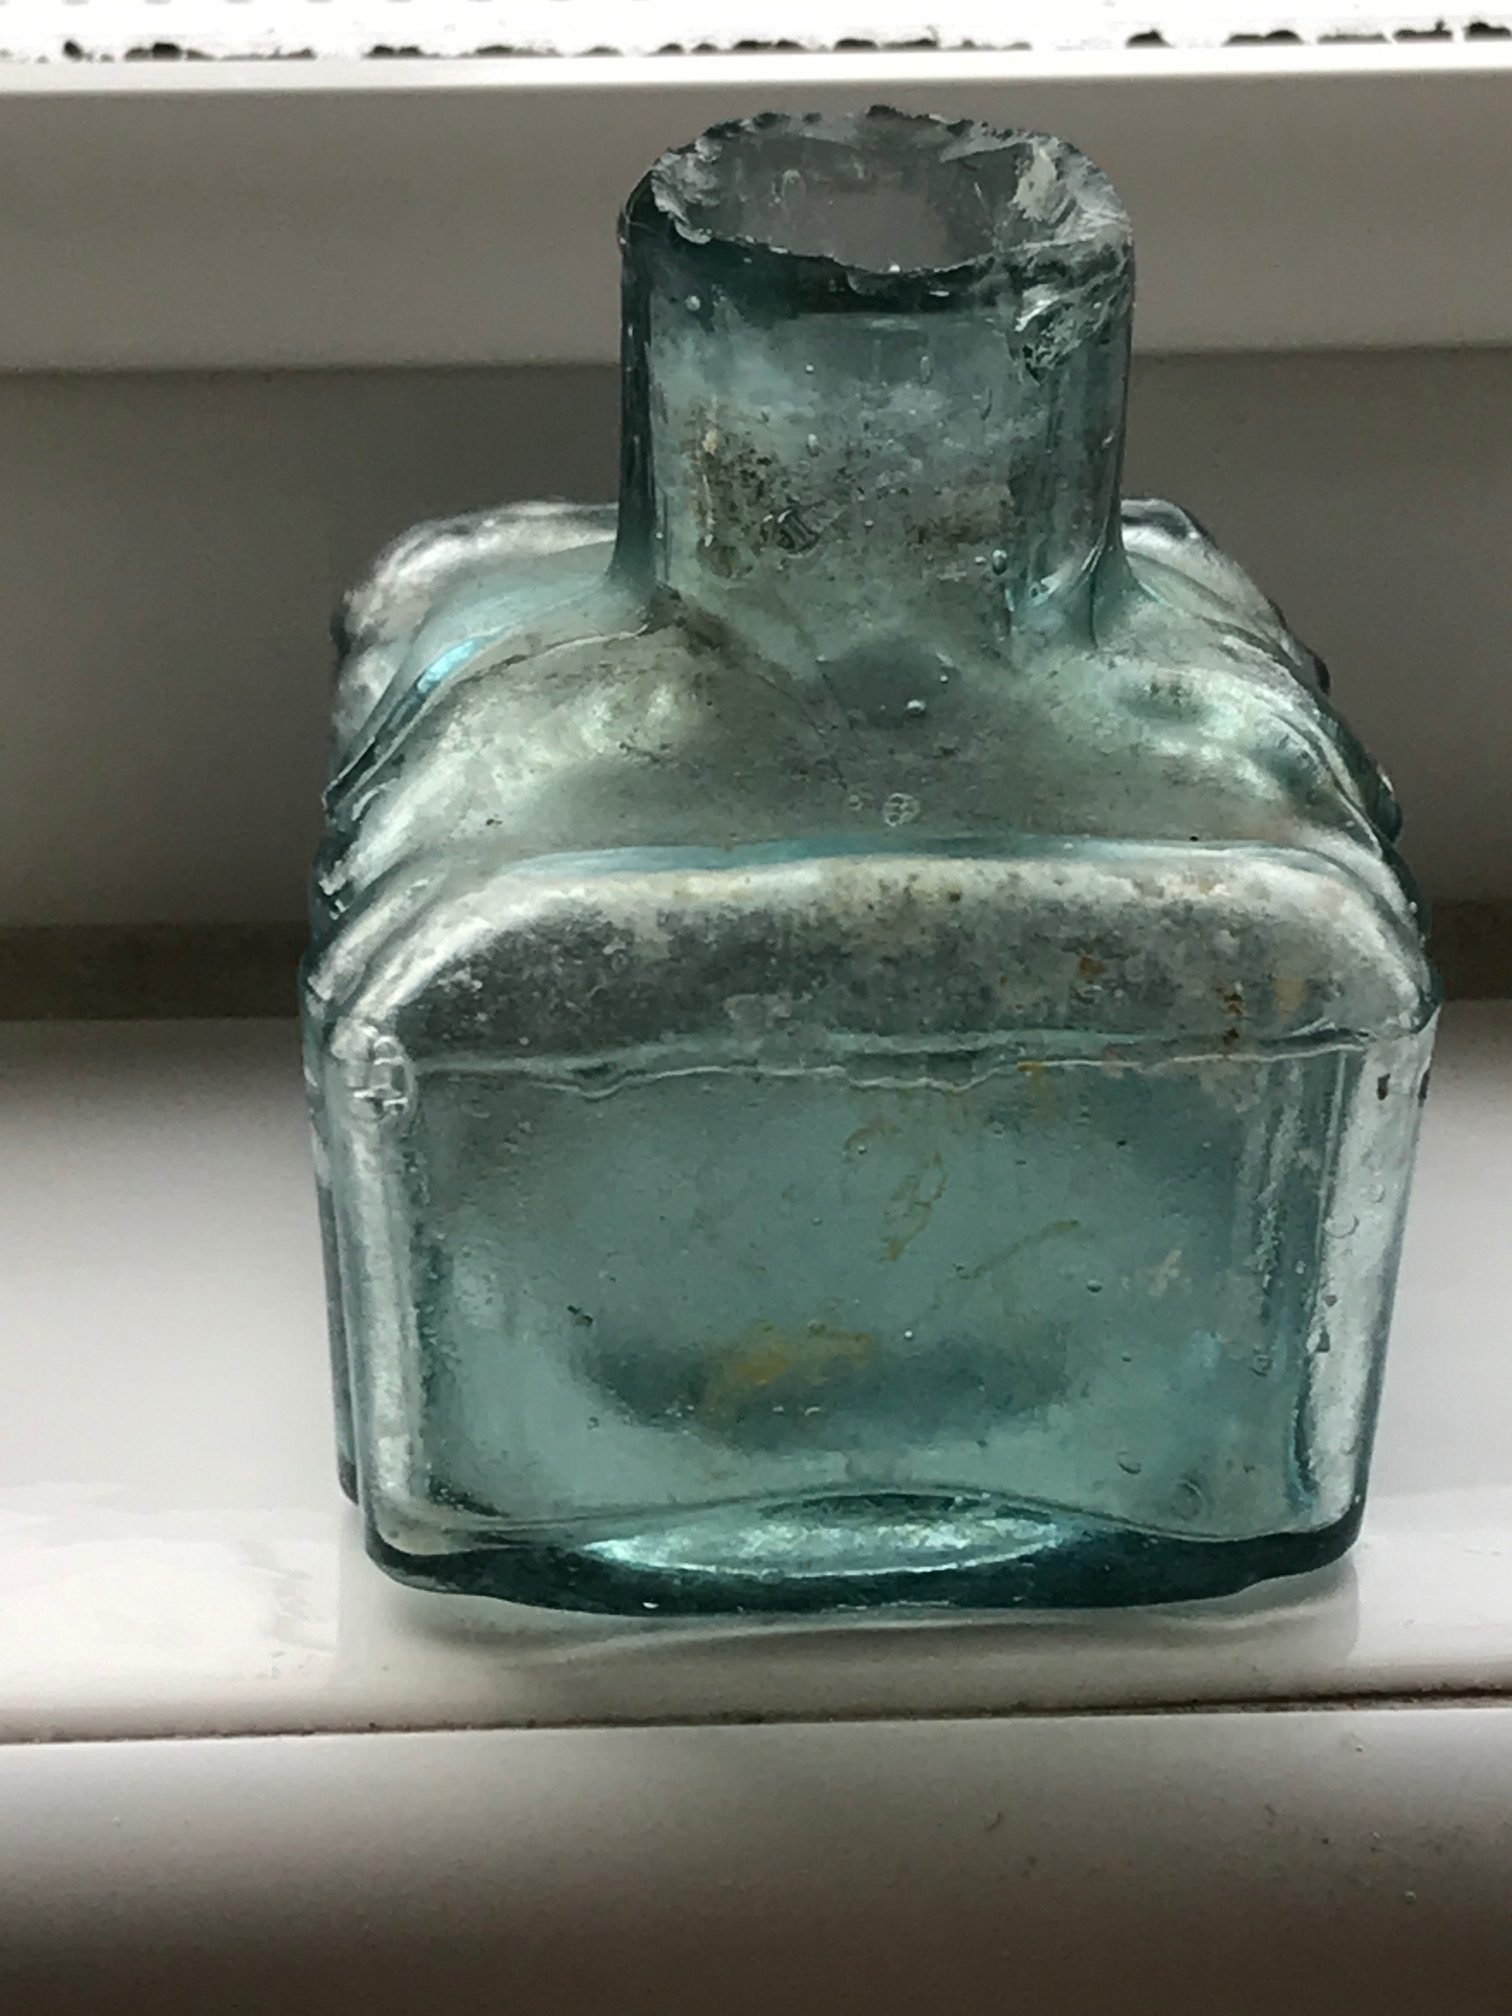 The Kitchen Window: A vintage ink pot?